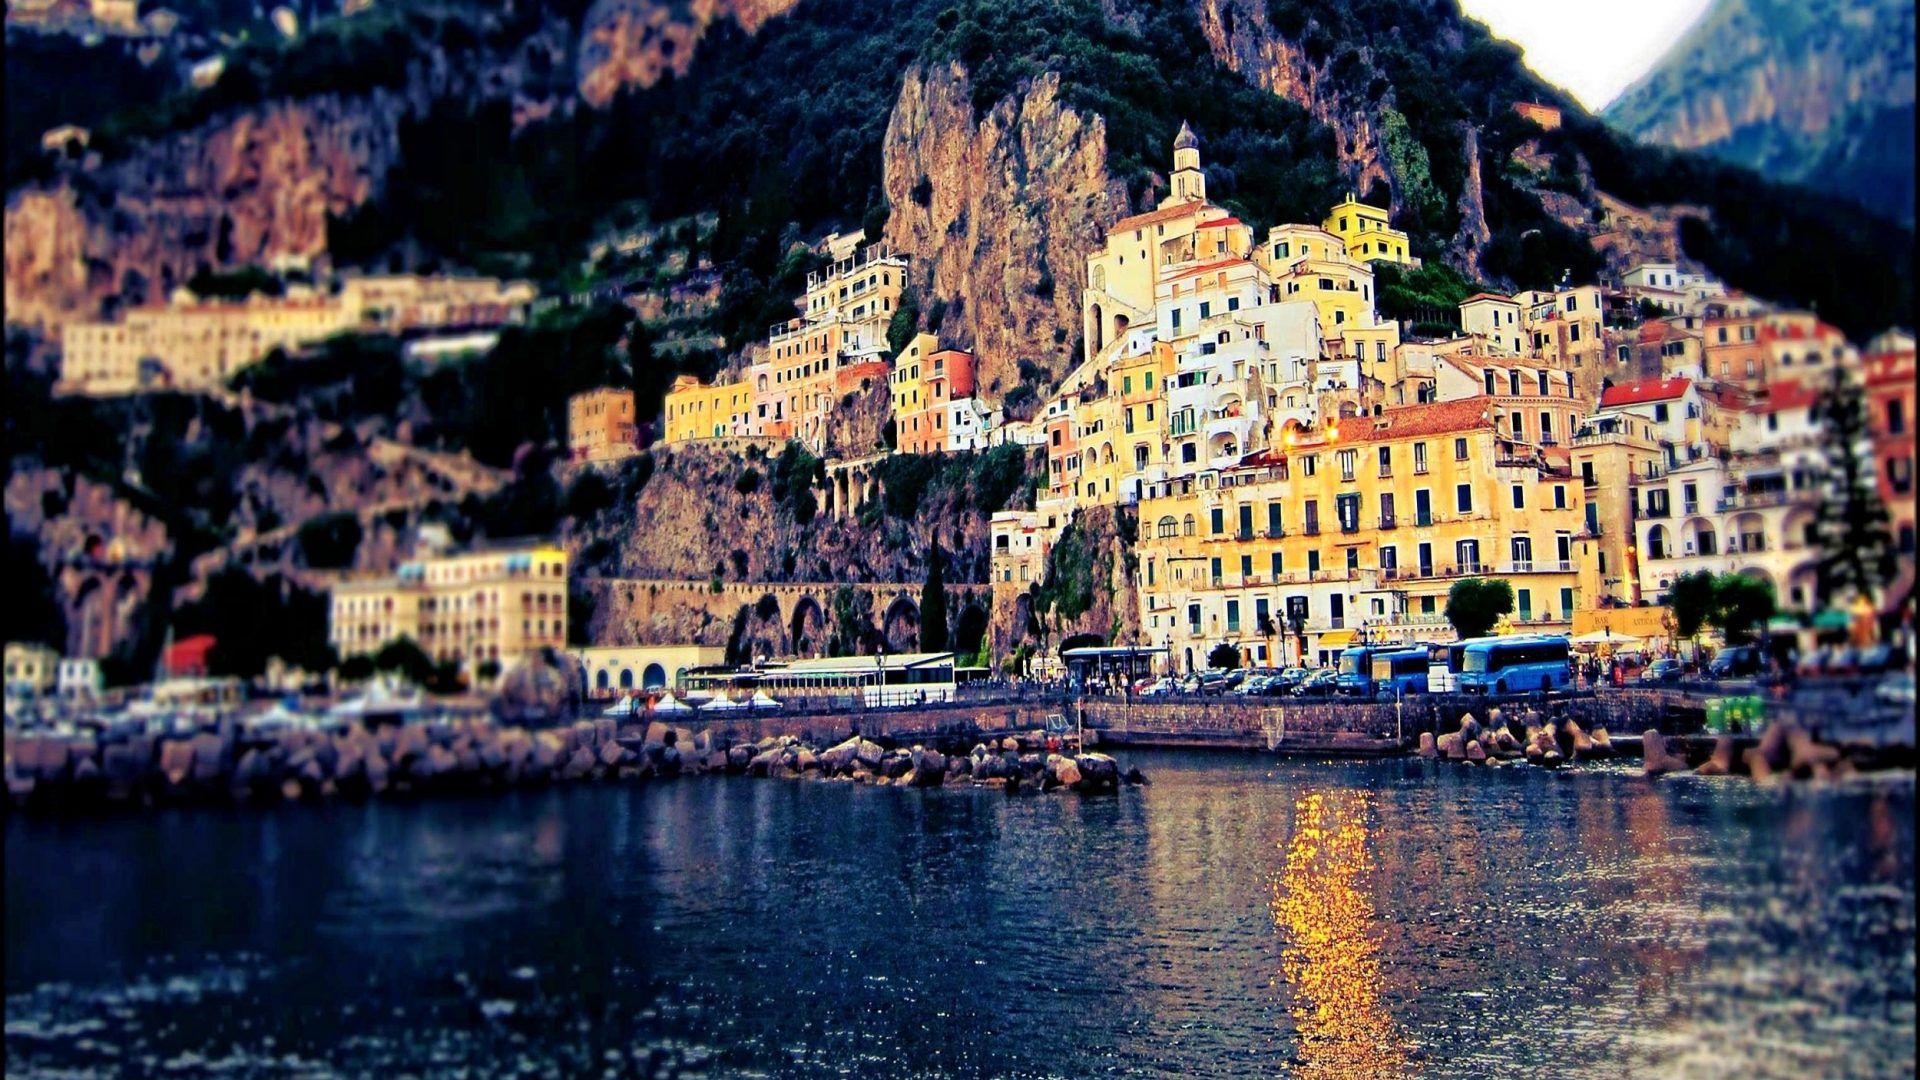 Amalfi Tag wallpaper: Amalfi Coast Italy Town Rock Panorama View